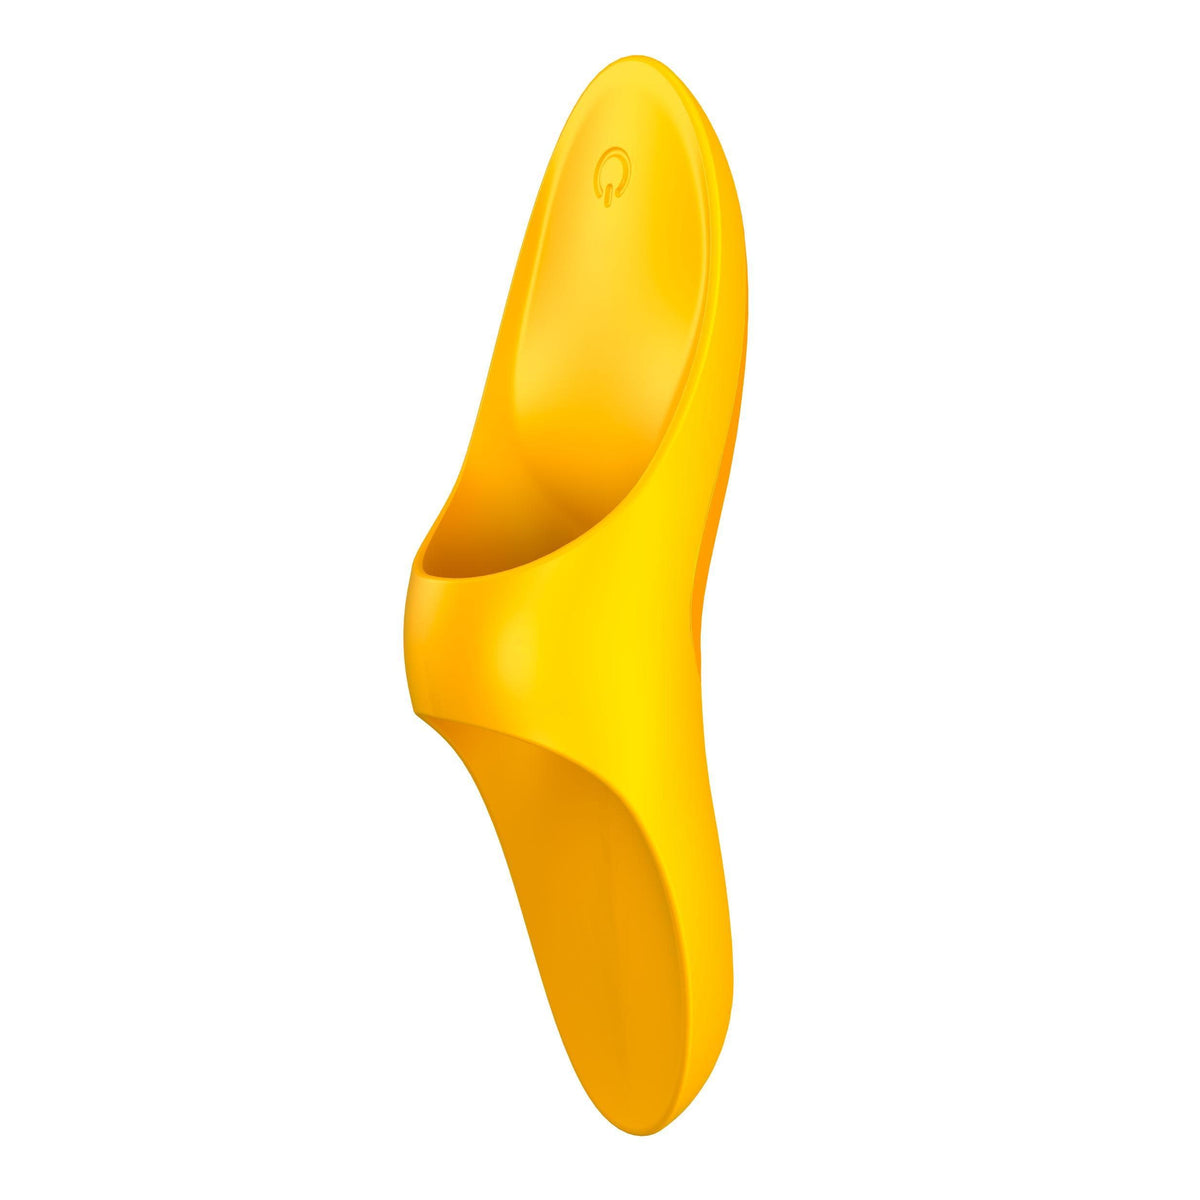 clit vibrator, clitoral vibrator